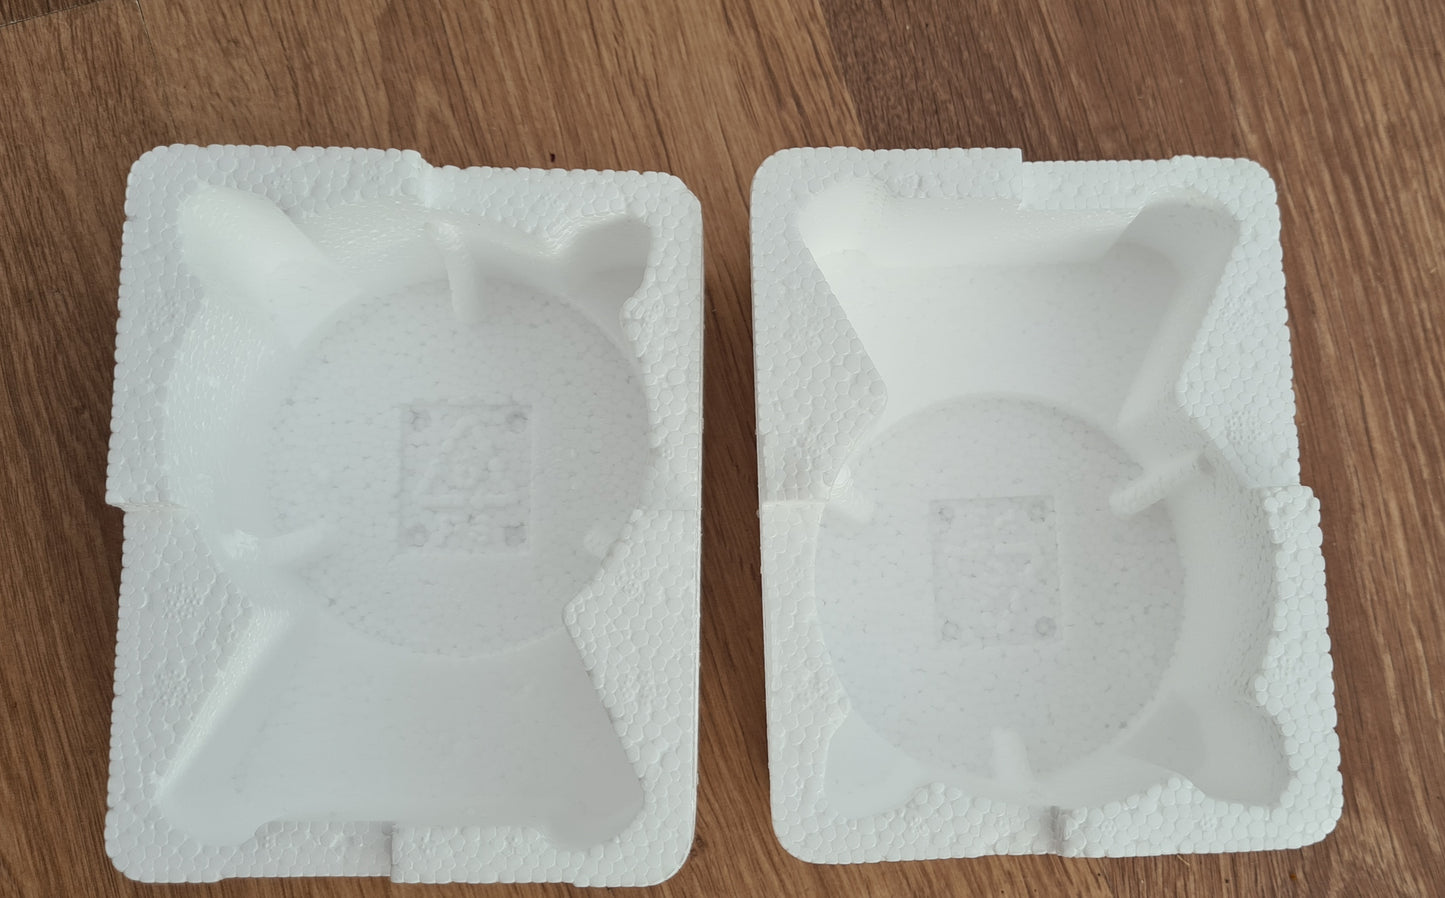 polystyrene mug mailers- PK OF 5